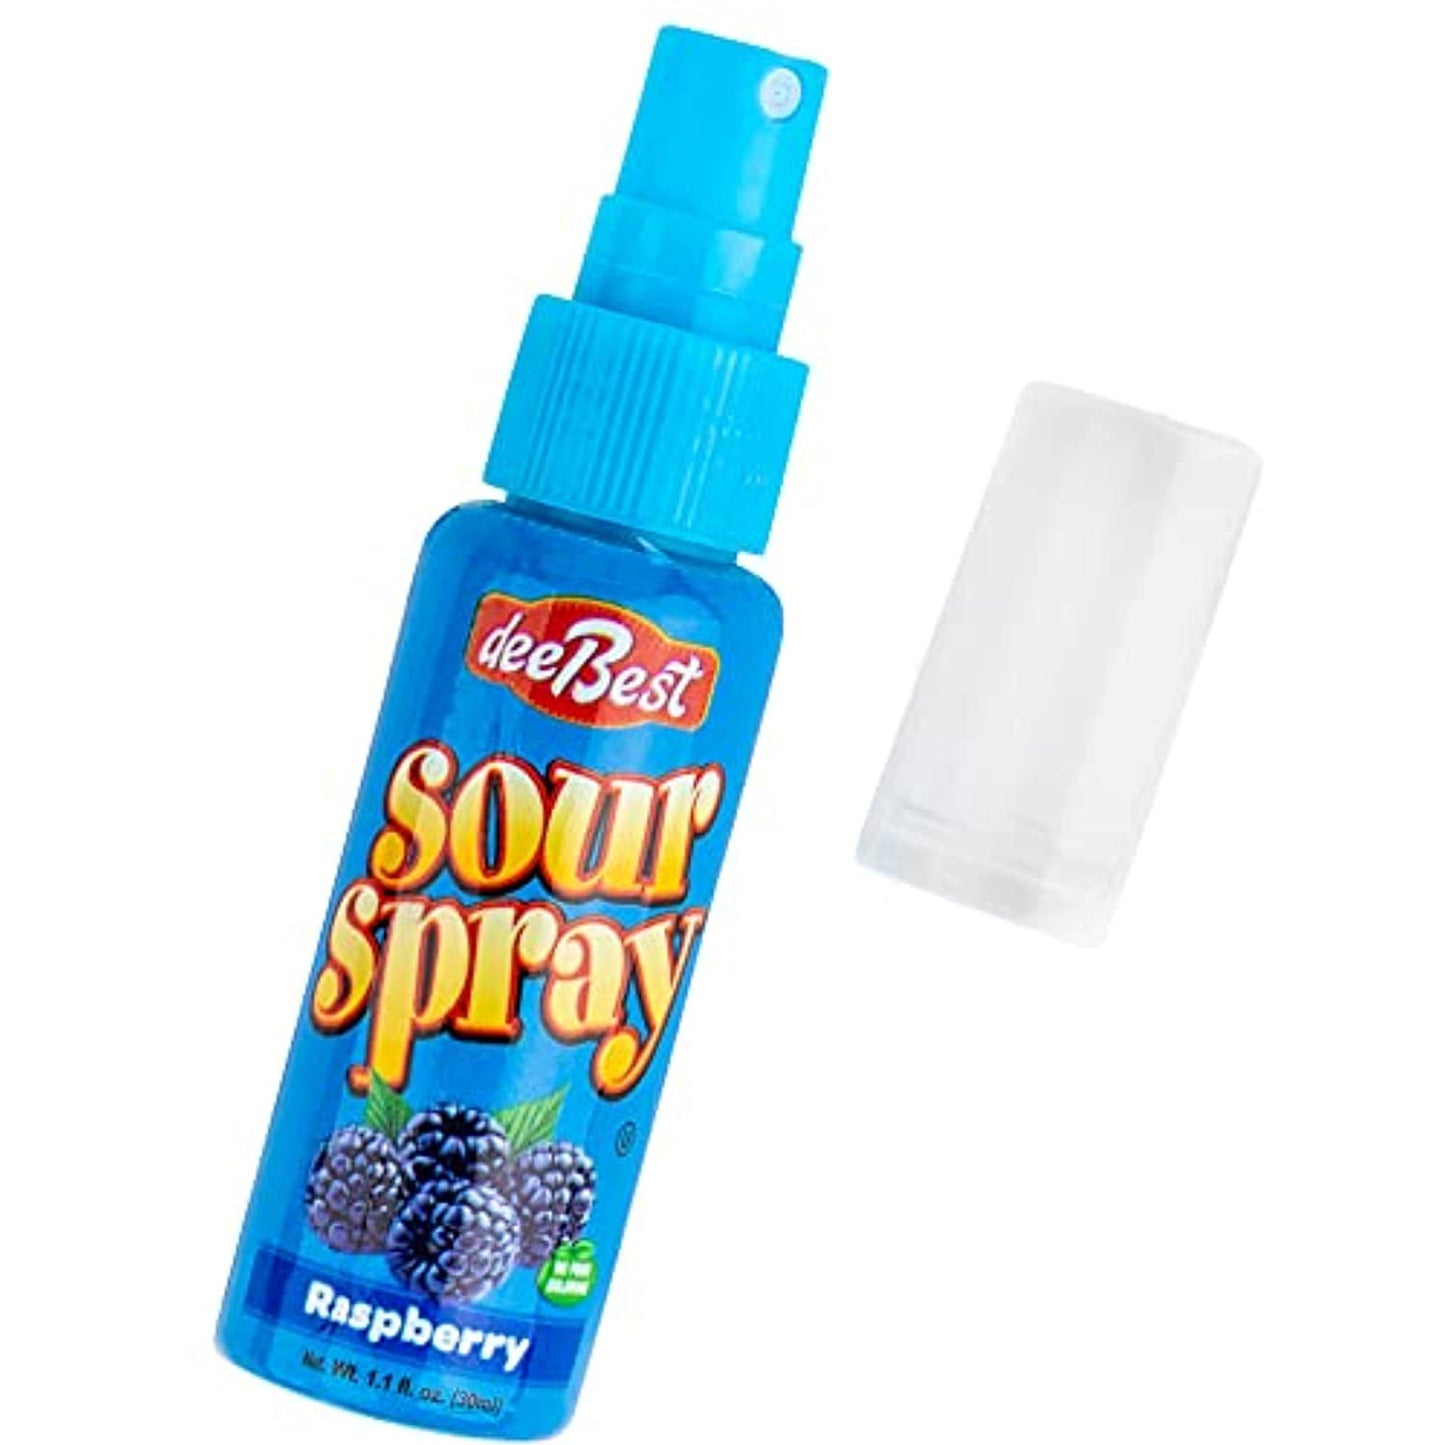 Dee Best Sour Spray Raspberry .85oz - 24ct